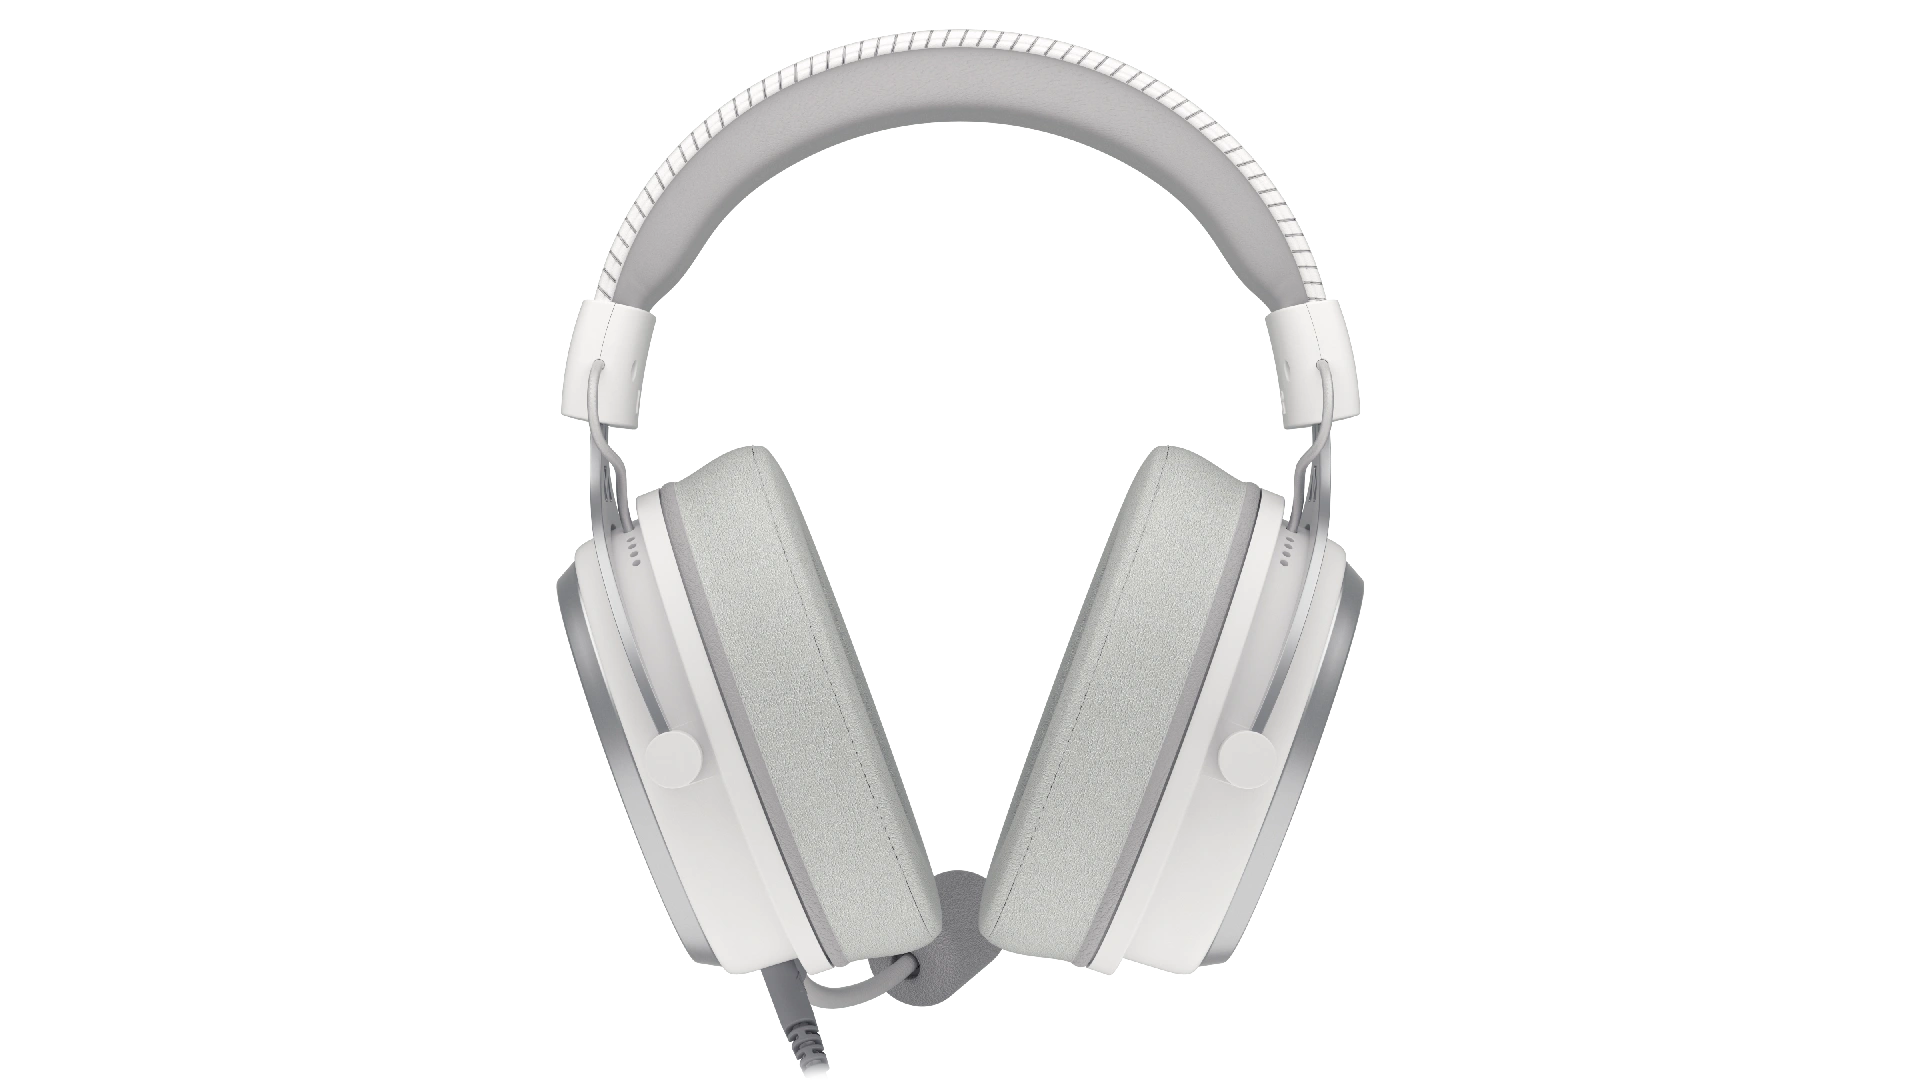 ENDORFY Viro Onyx White, kabelgebundenes Headset